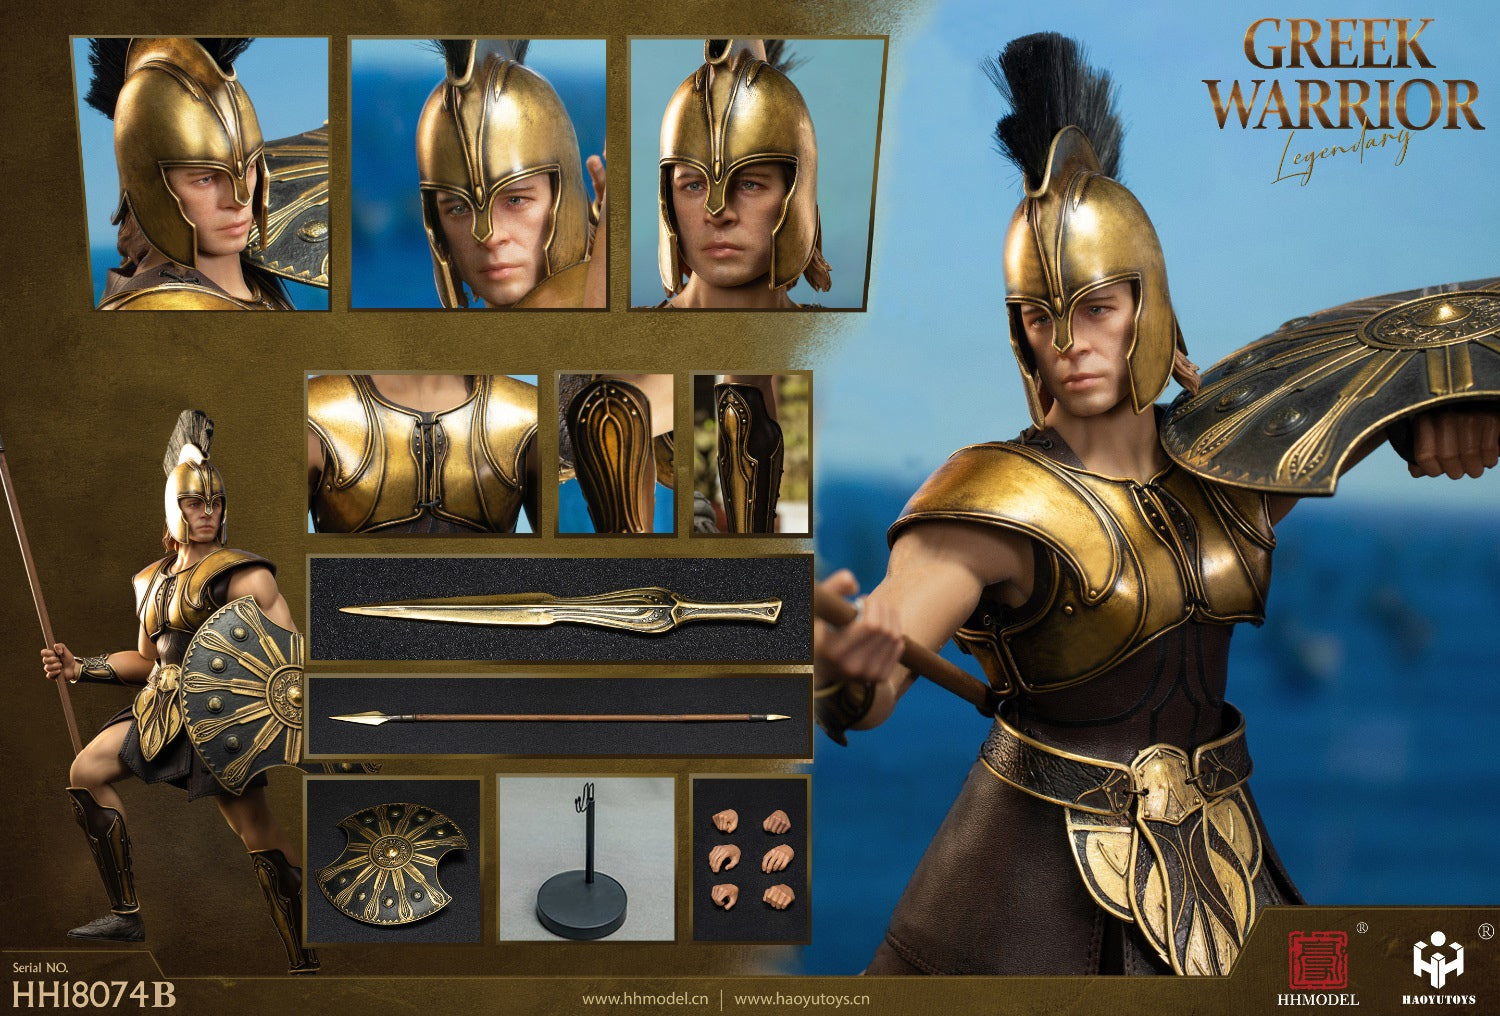 Greek Warrior: Standard Figure: Haoyu Toys